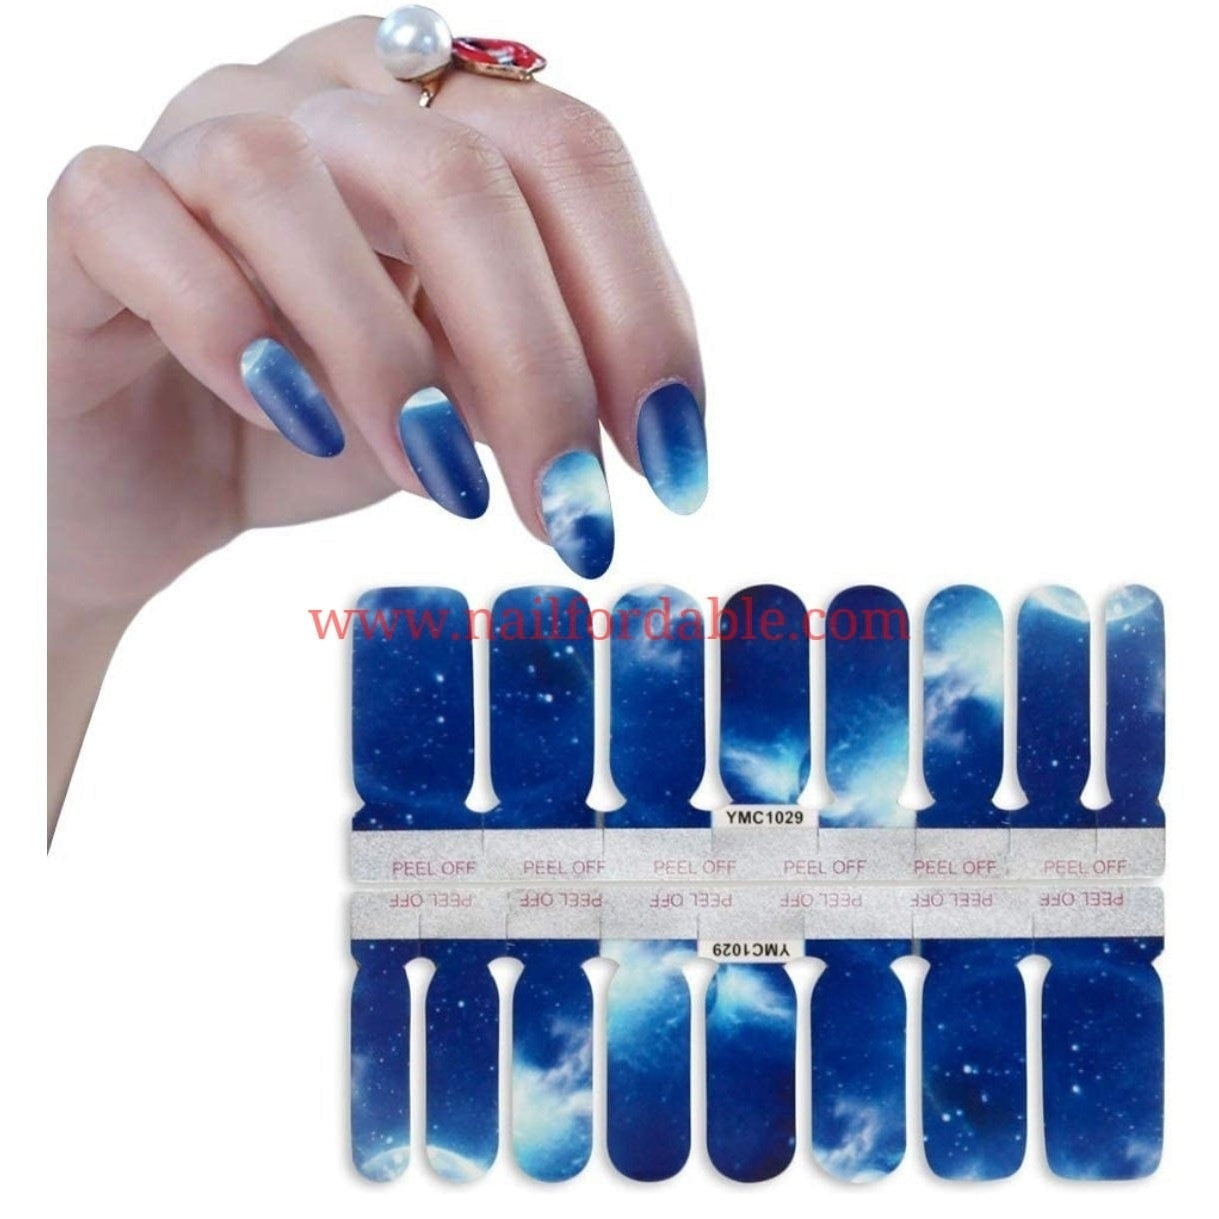 Night sky Nail Wraps | Semi Cured Gel Wraps | Gel Nail Wraps |Nail Polish | Nail Stickers